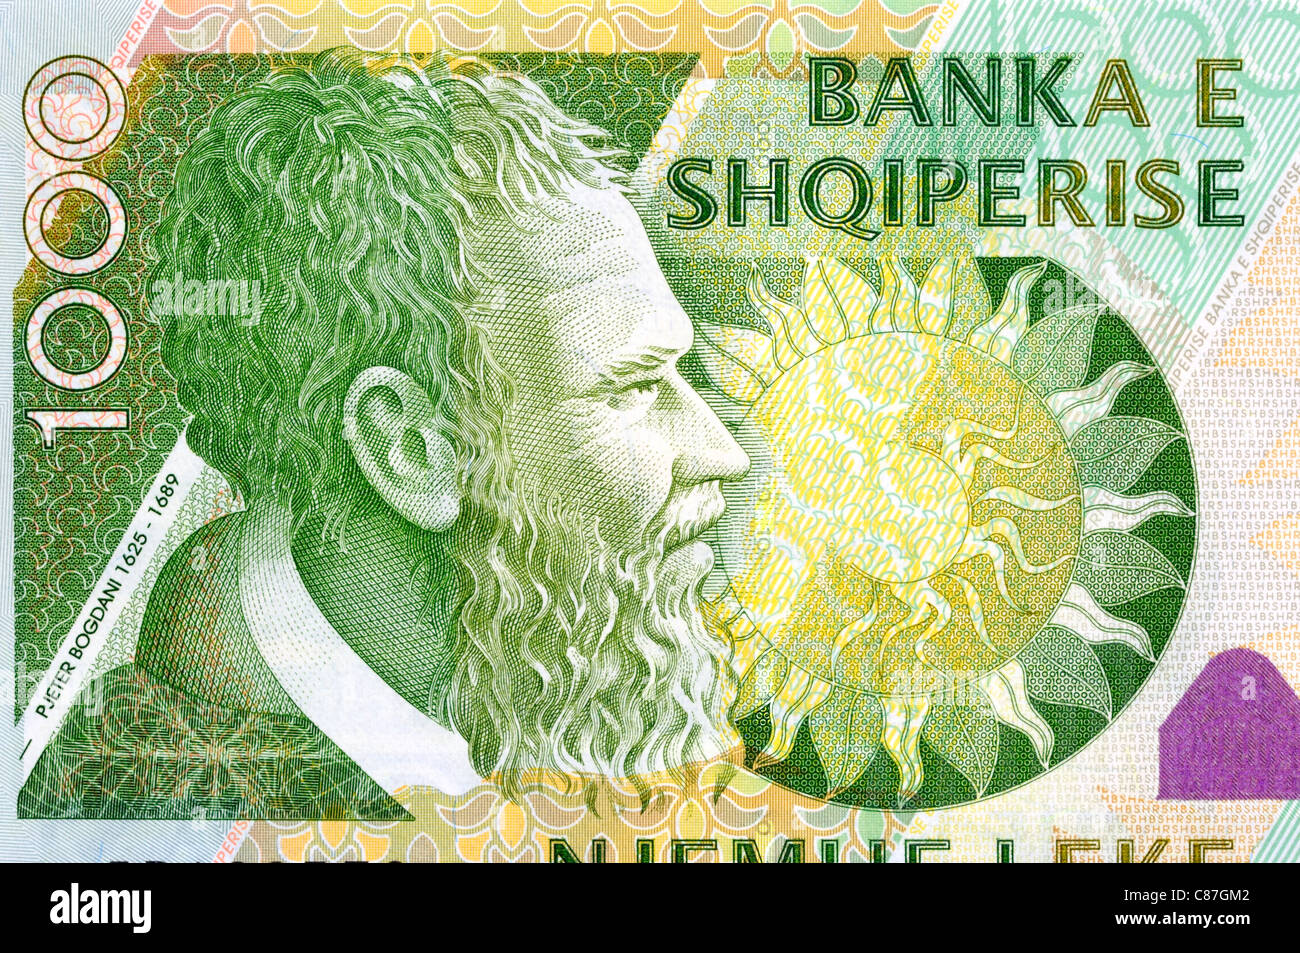 Albania 1000 One Thousand Leke Bank Note. Stock Photo